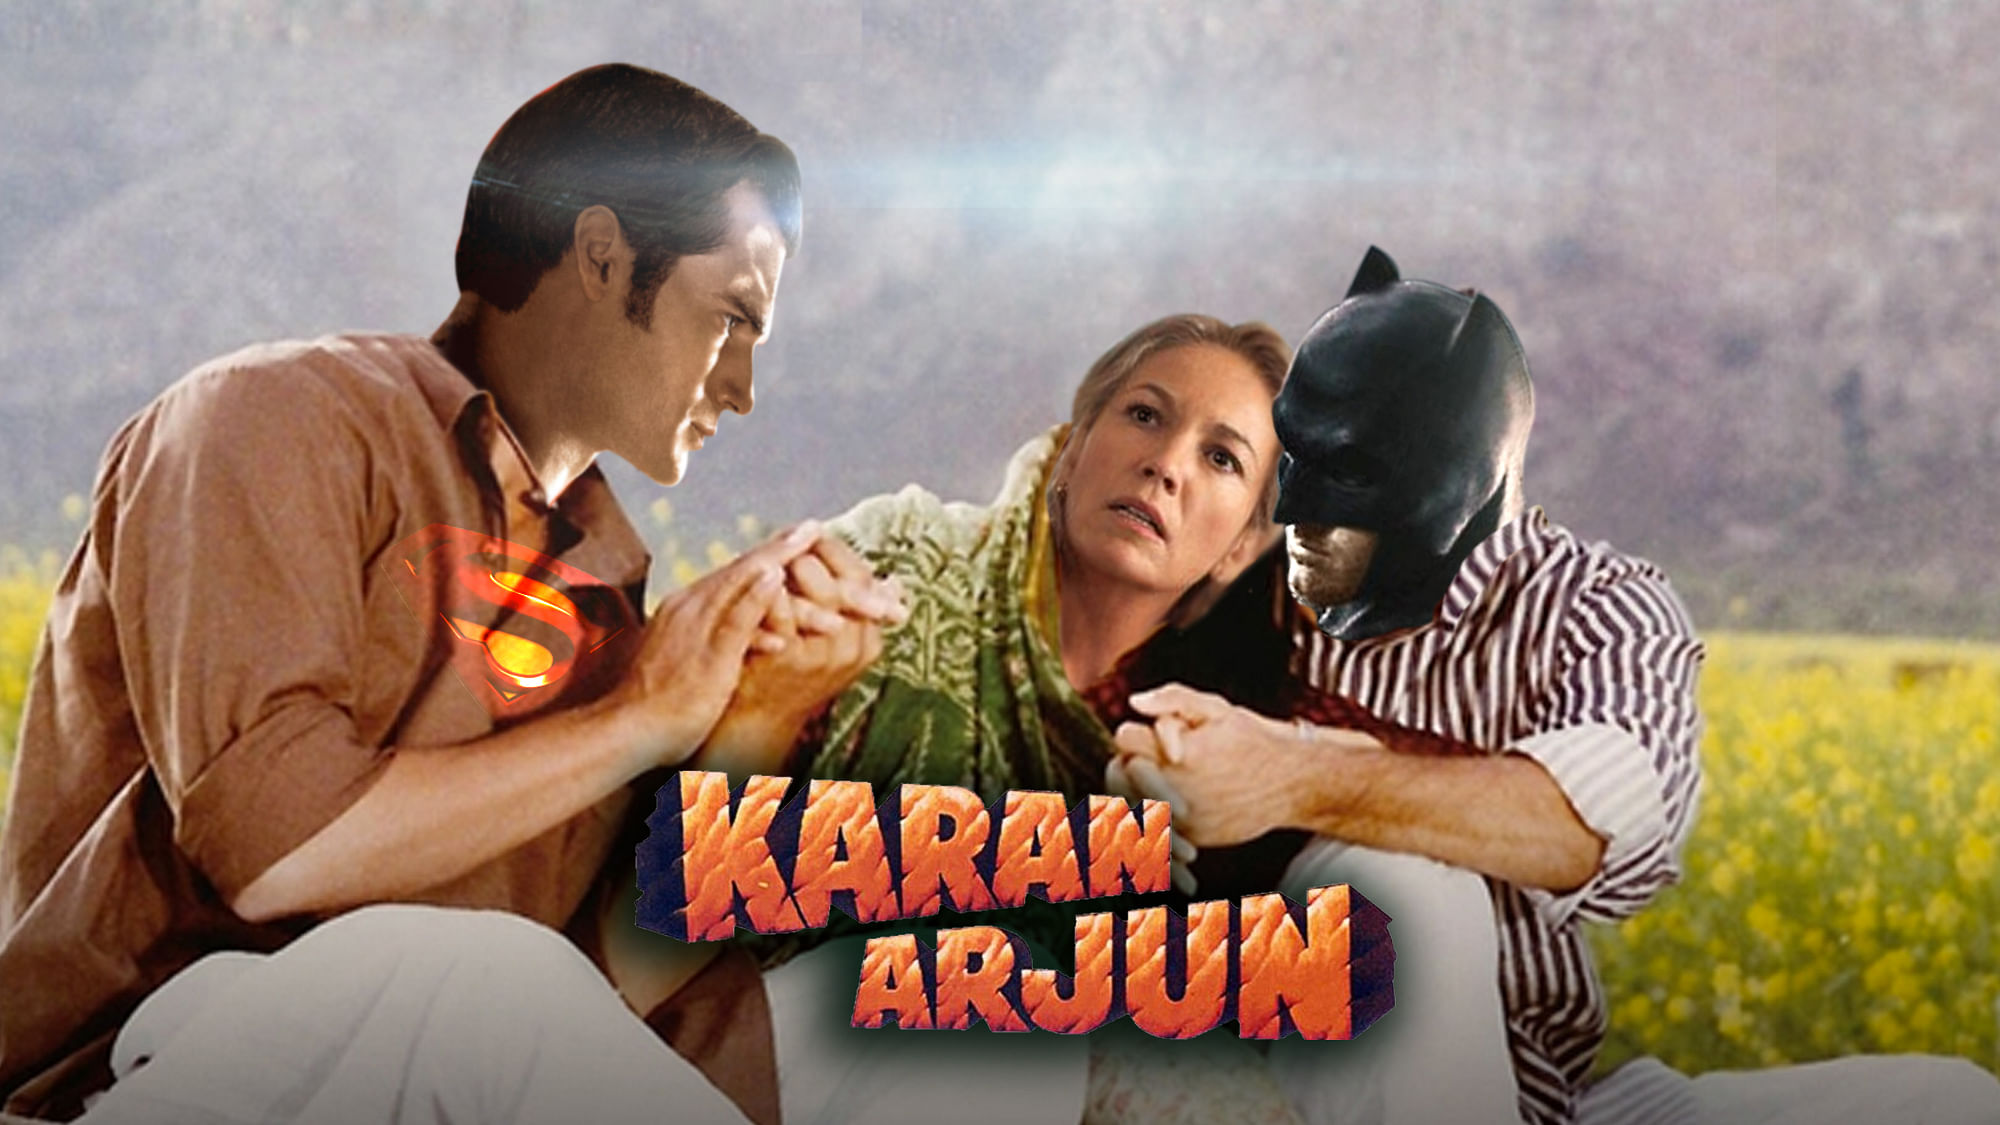 Superman-Batman aka Karan Arjun. (Photo: Rahul Gupta/ <b>The Quint</b>)